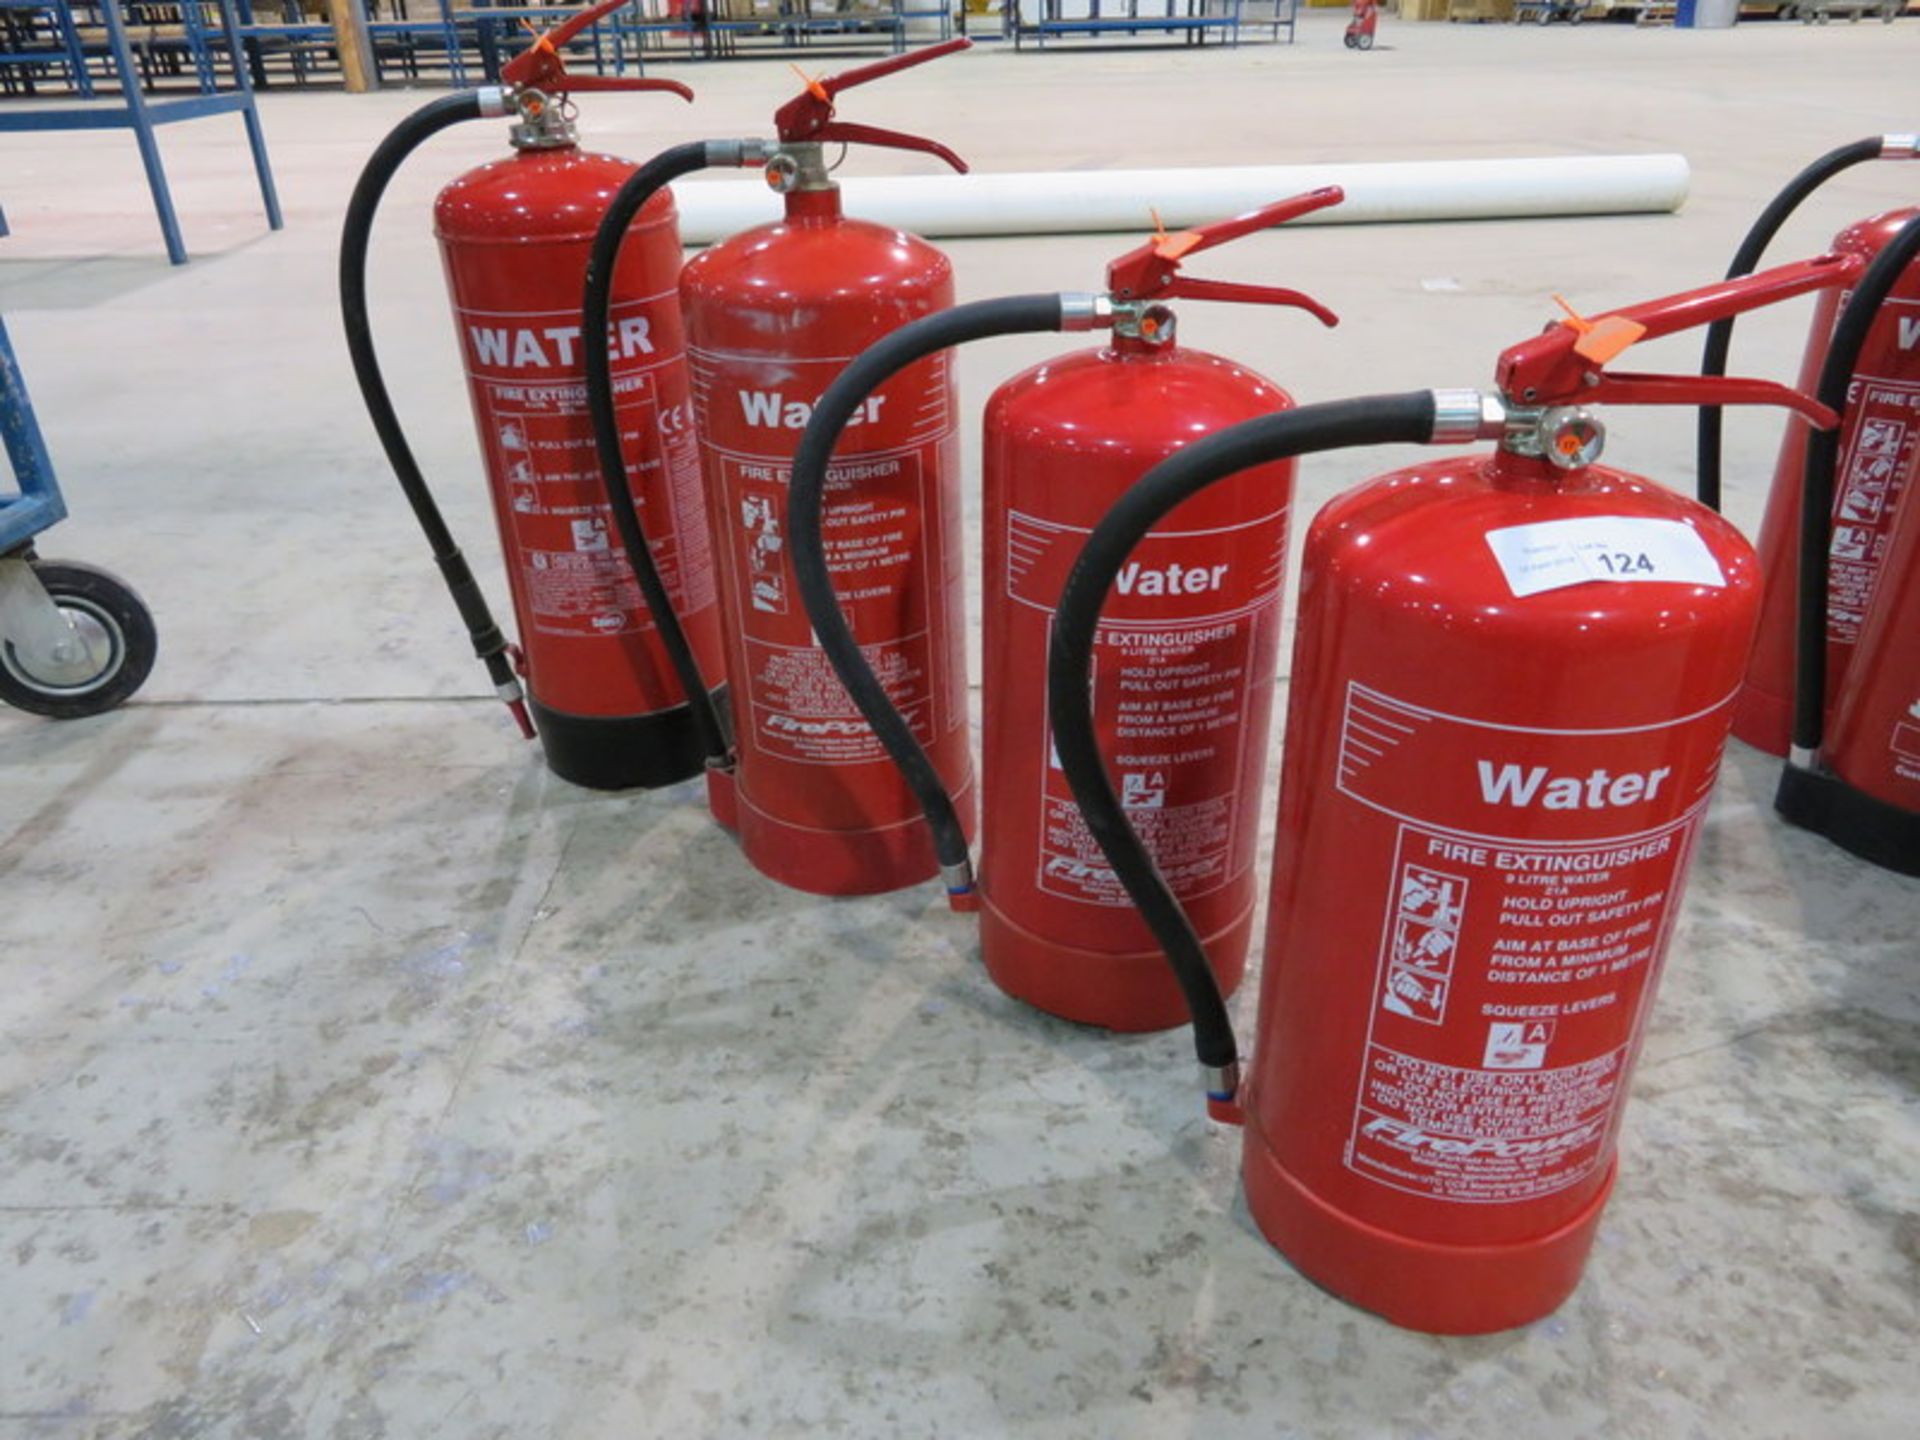 4x Water fire extinguisher